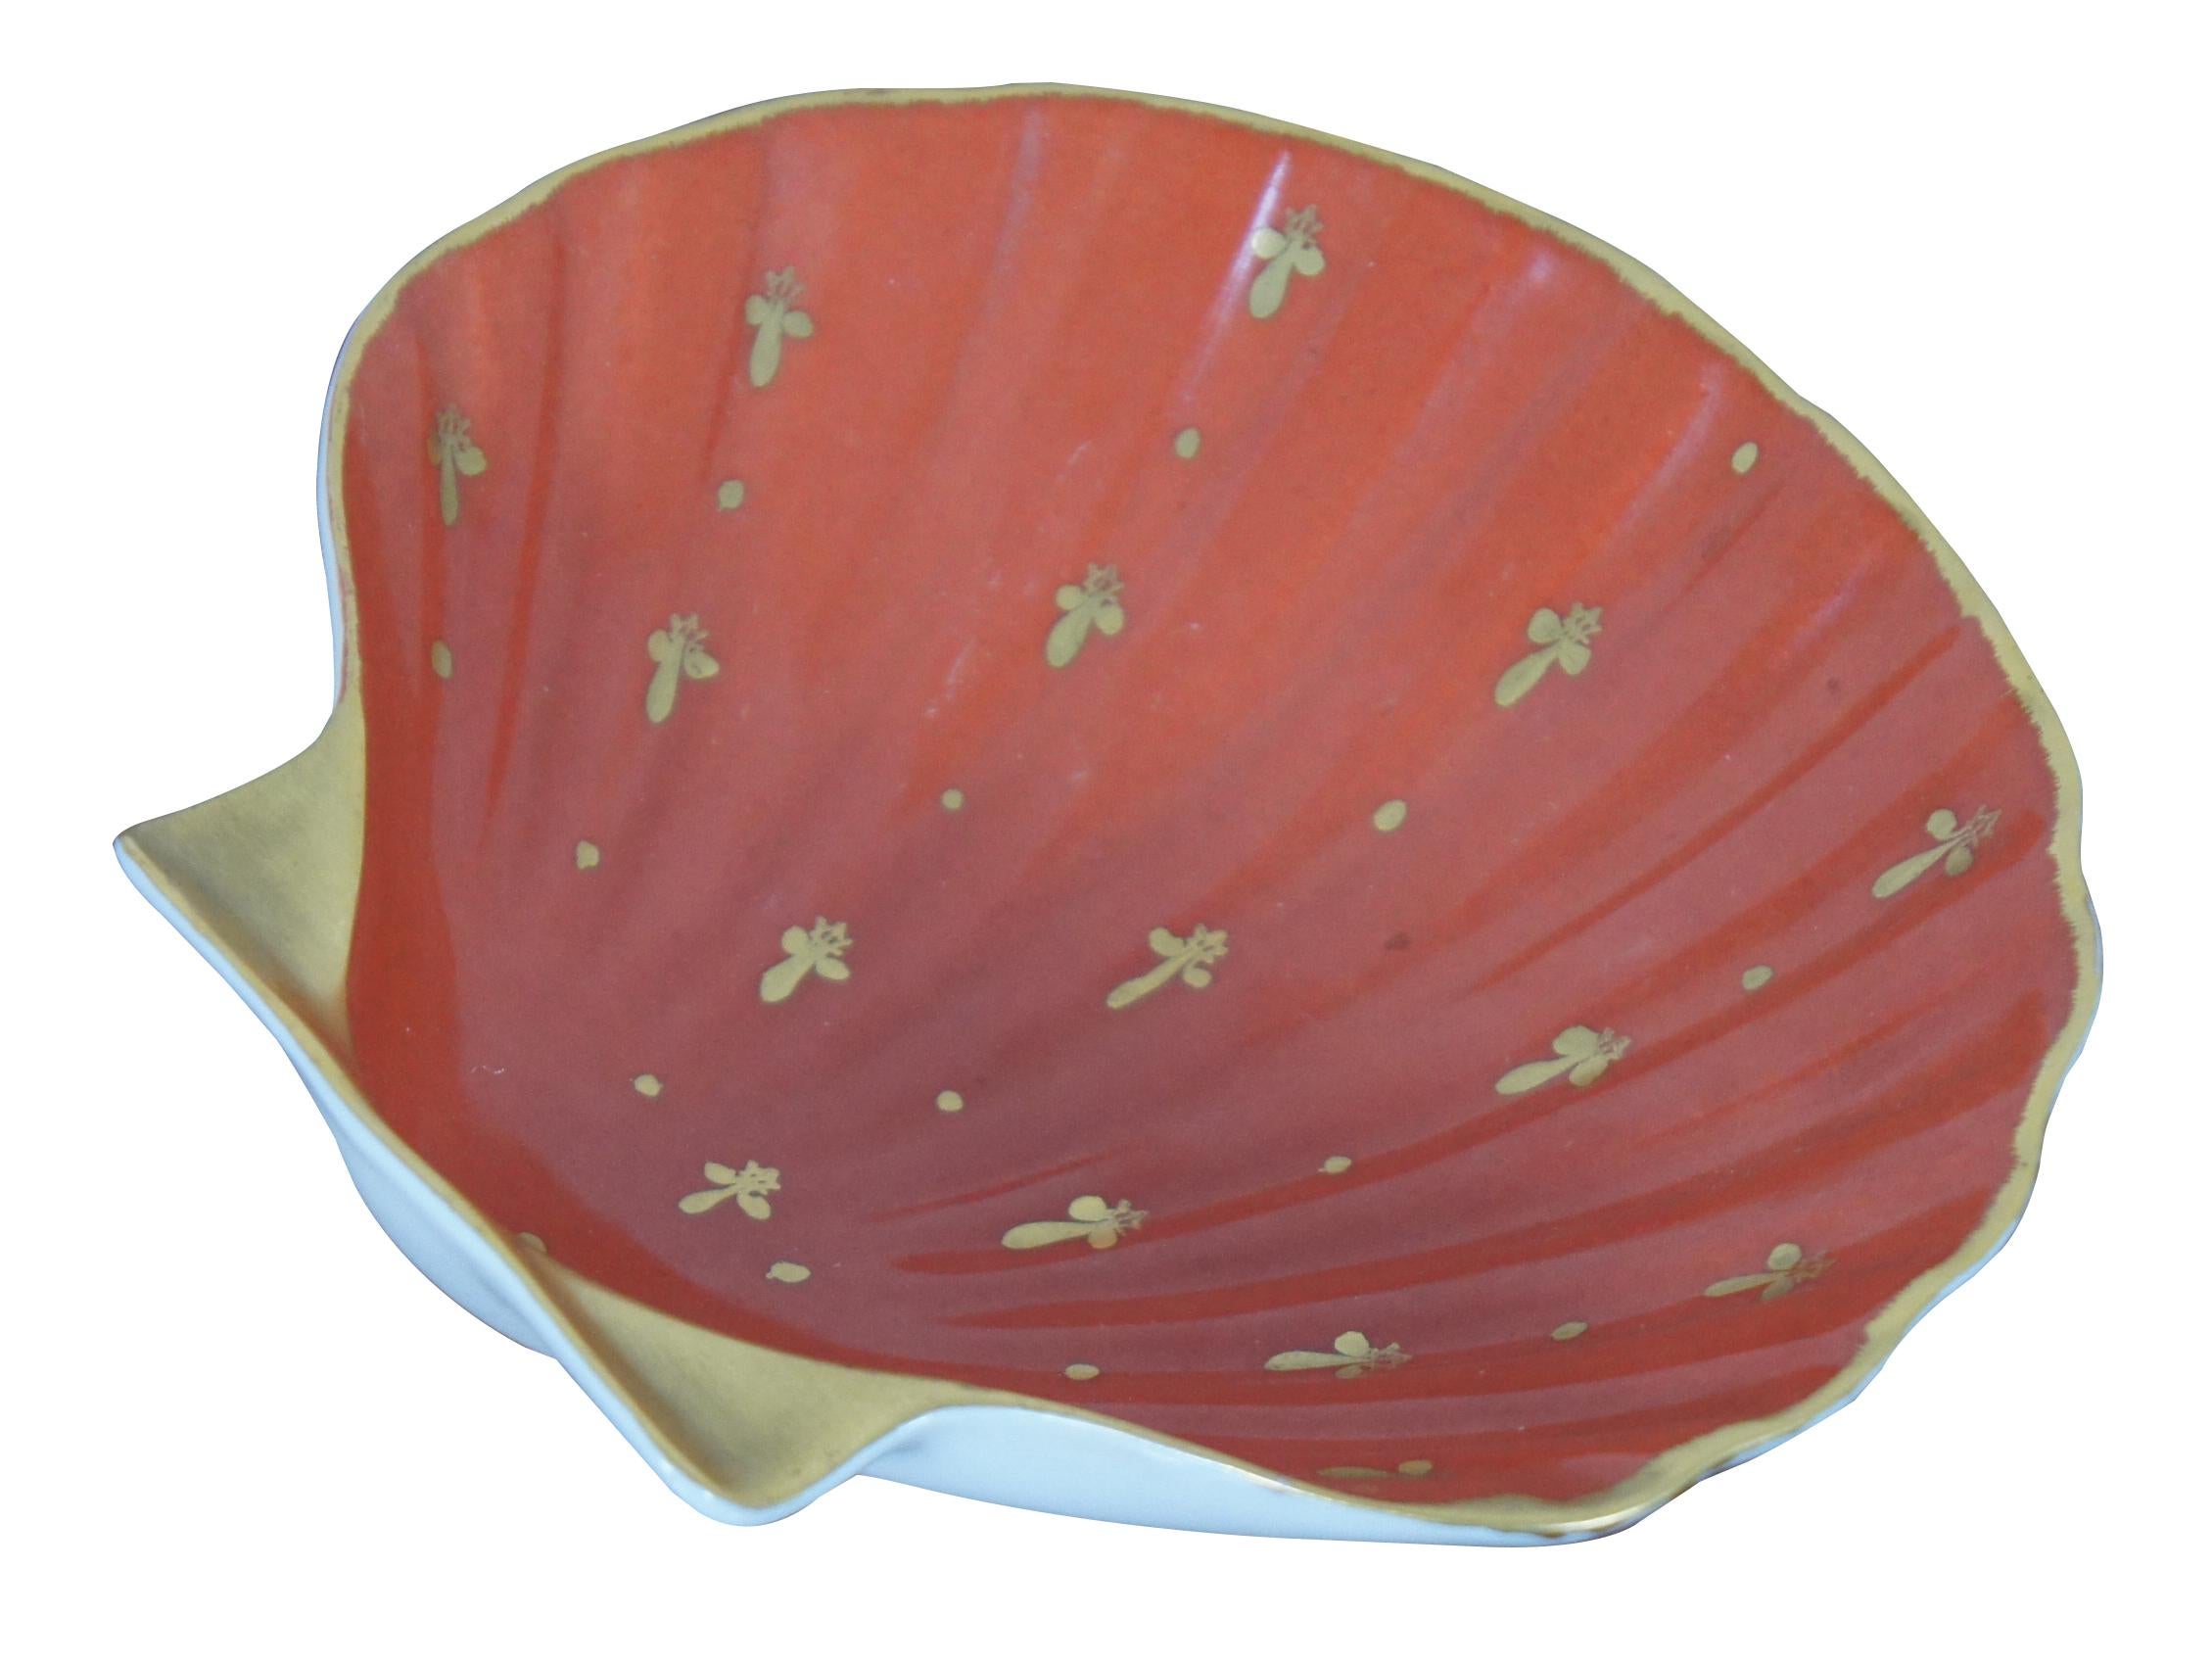 Vintage Limoges France porcelain scalloped shell shaped trinket dish, hand painted red with gold fleur de lis. Measures: 6